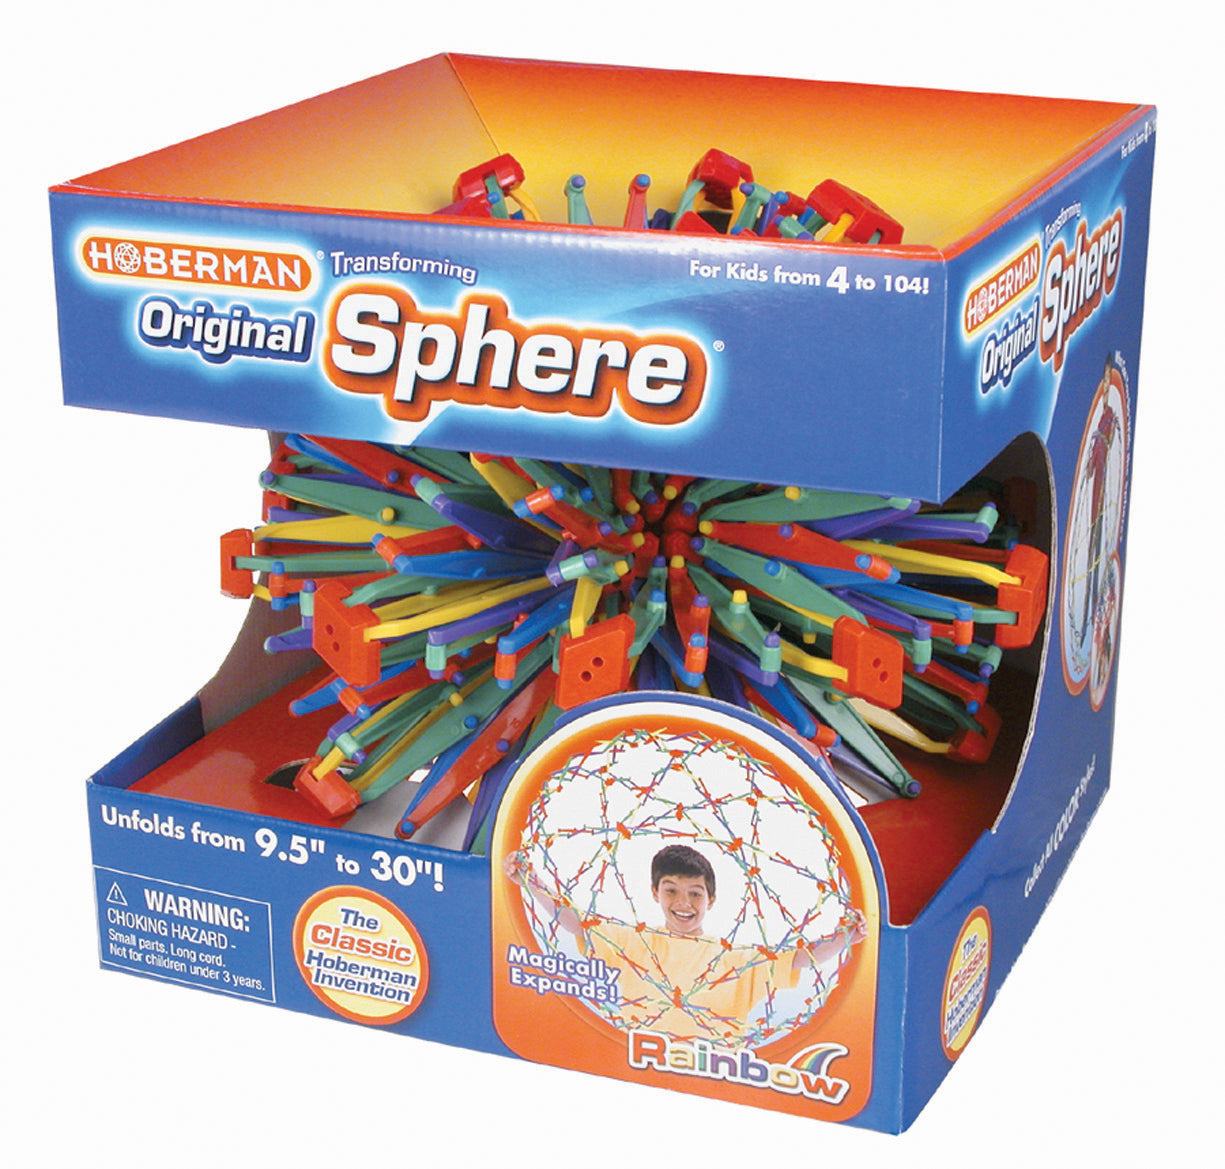 Original Hoberman Sphere - Rainbow